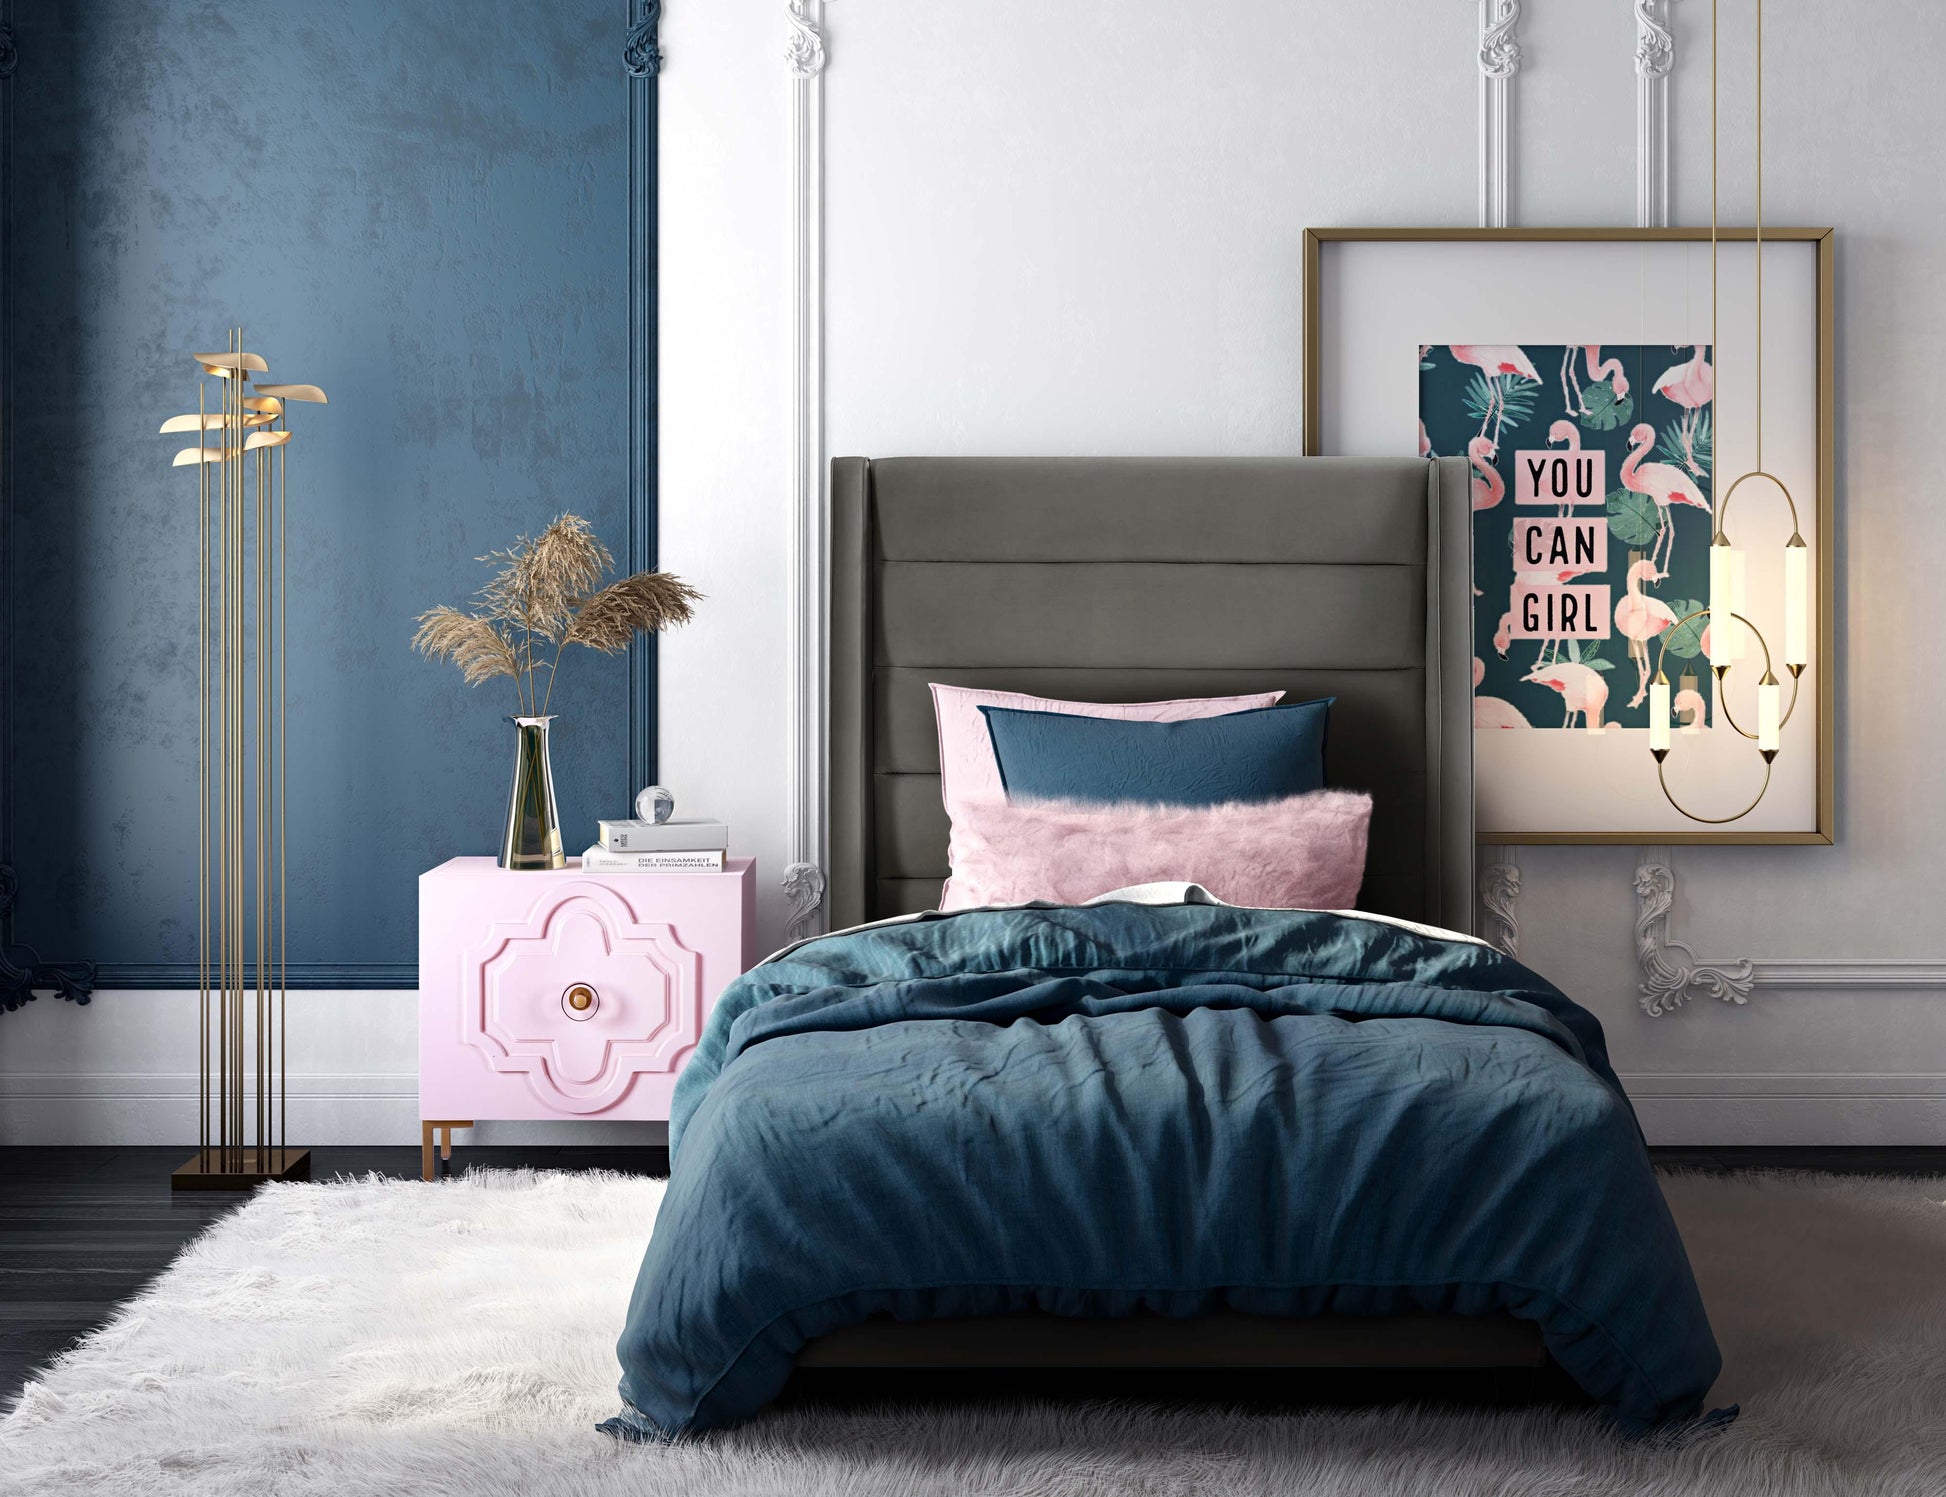 Tov Furniture Koah Grey Velvet Twin Bed